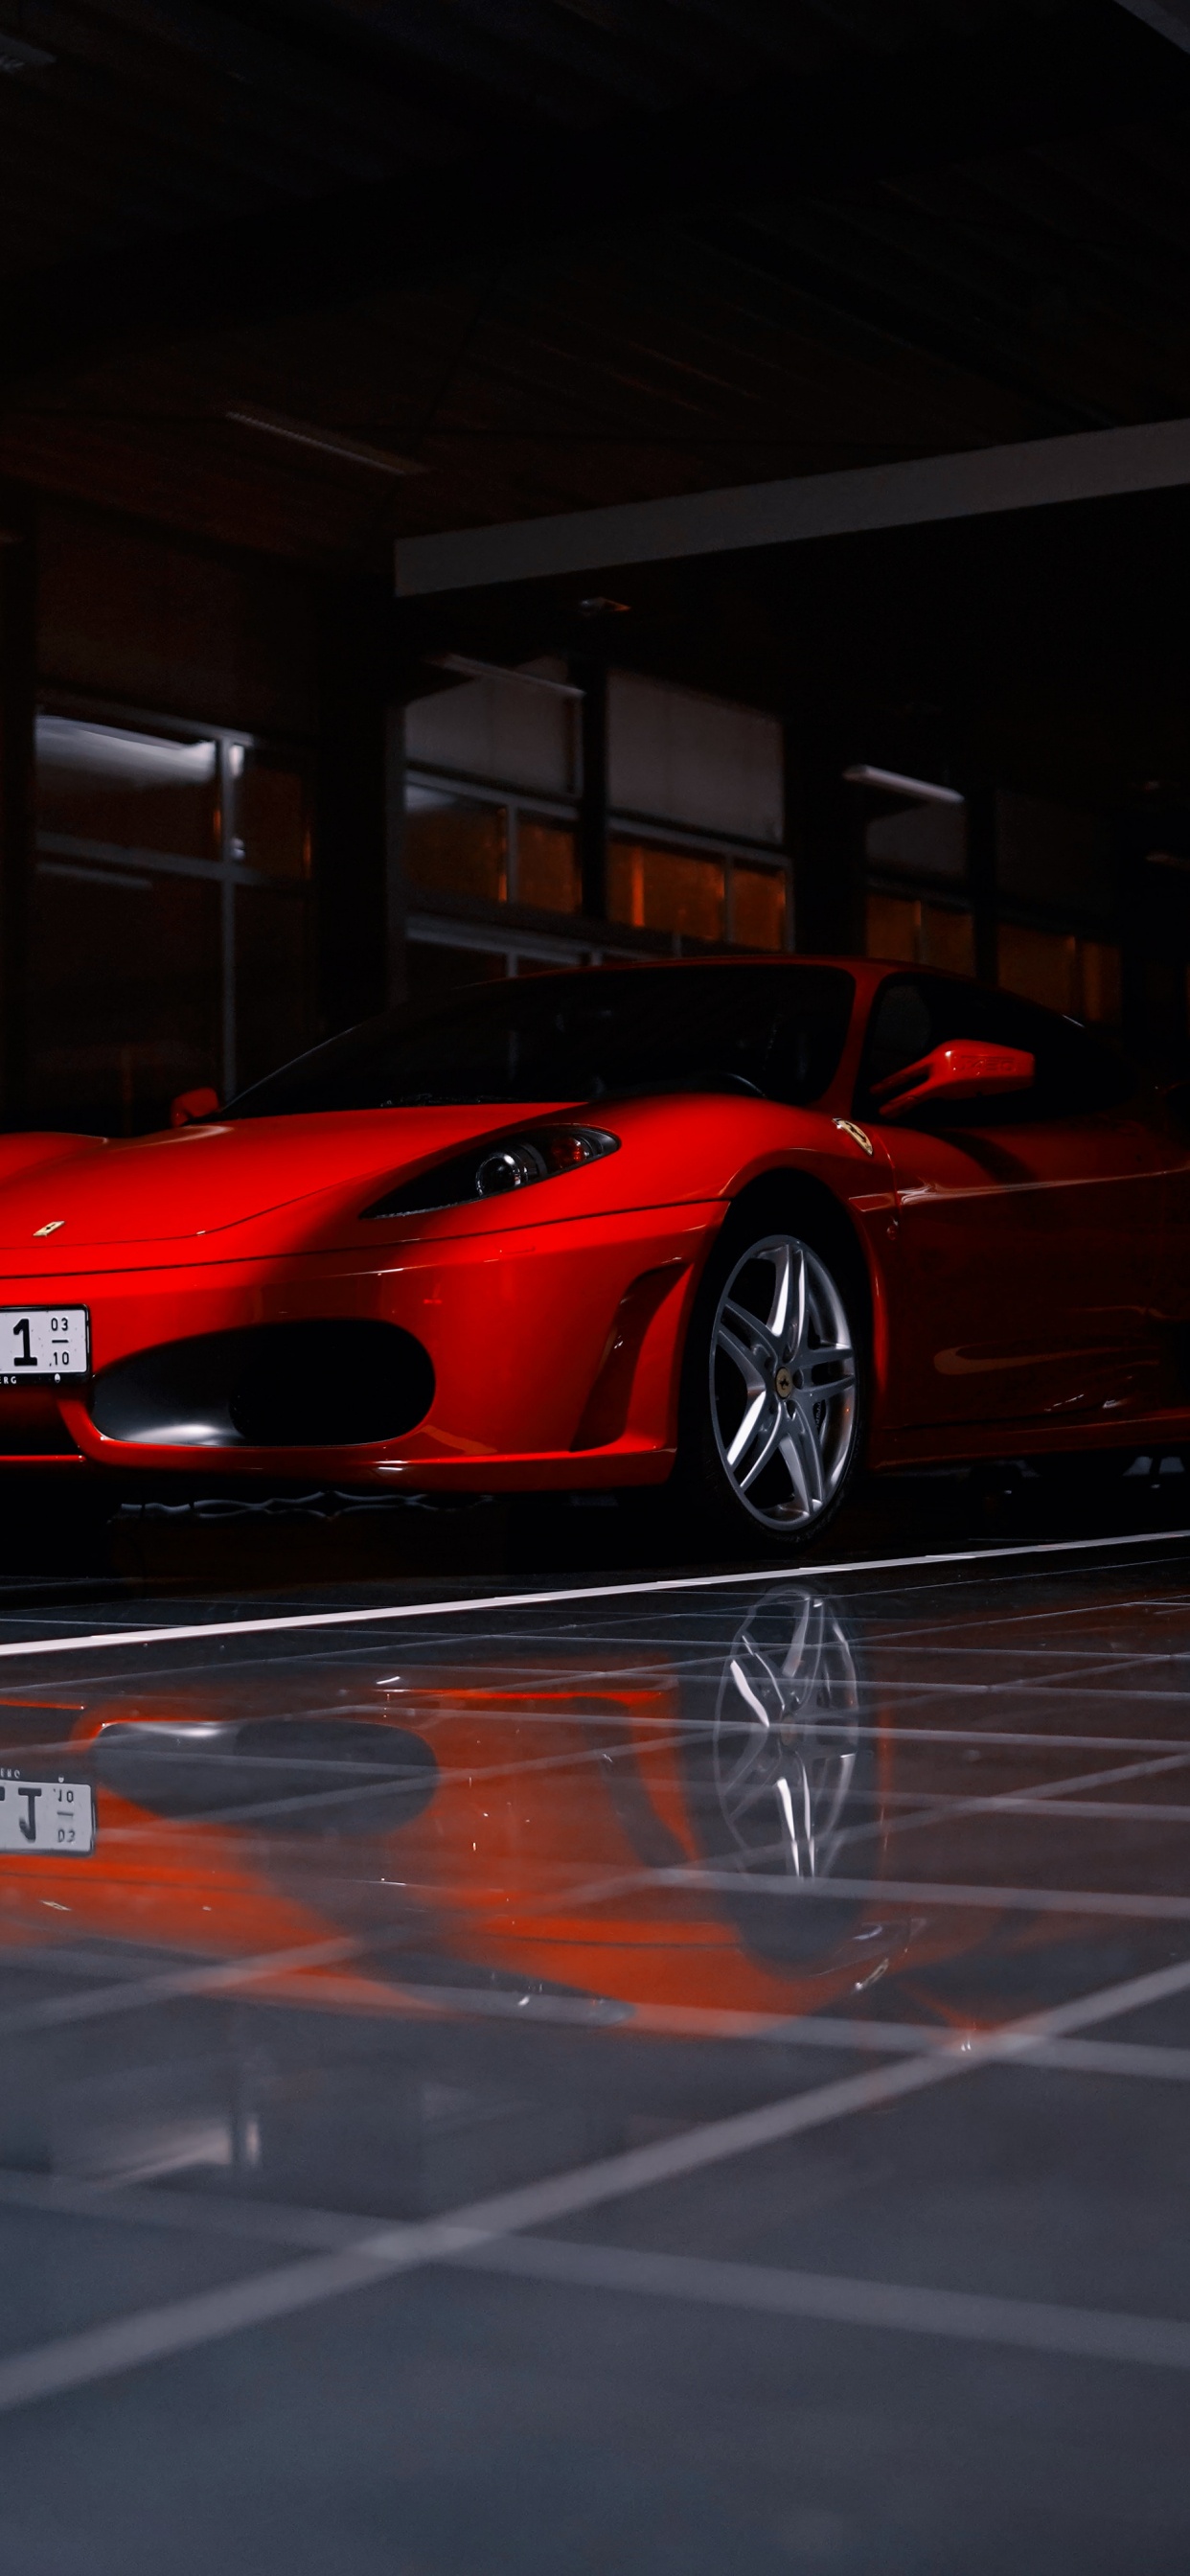 Red Ferrari 458 Italia Parked on Parking Lot. Wallpaper in 1242x2688 Resolution